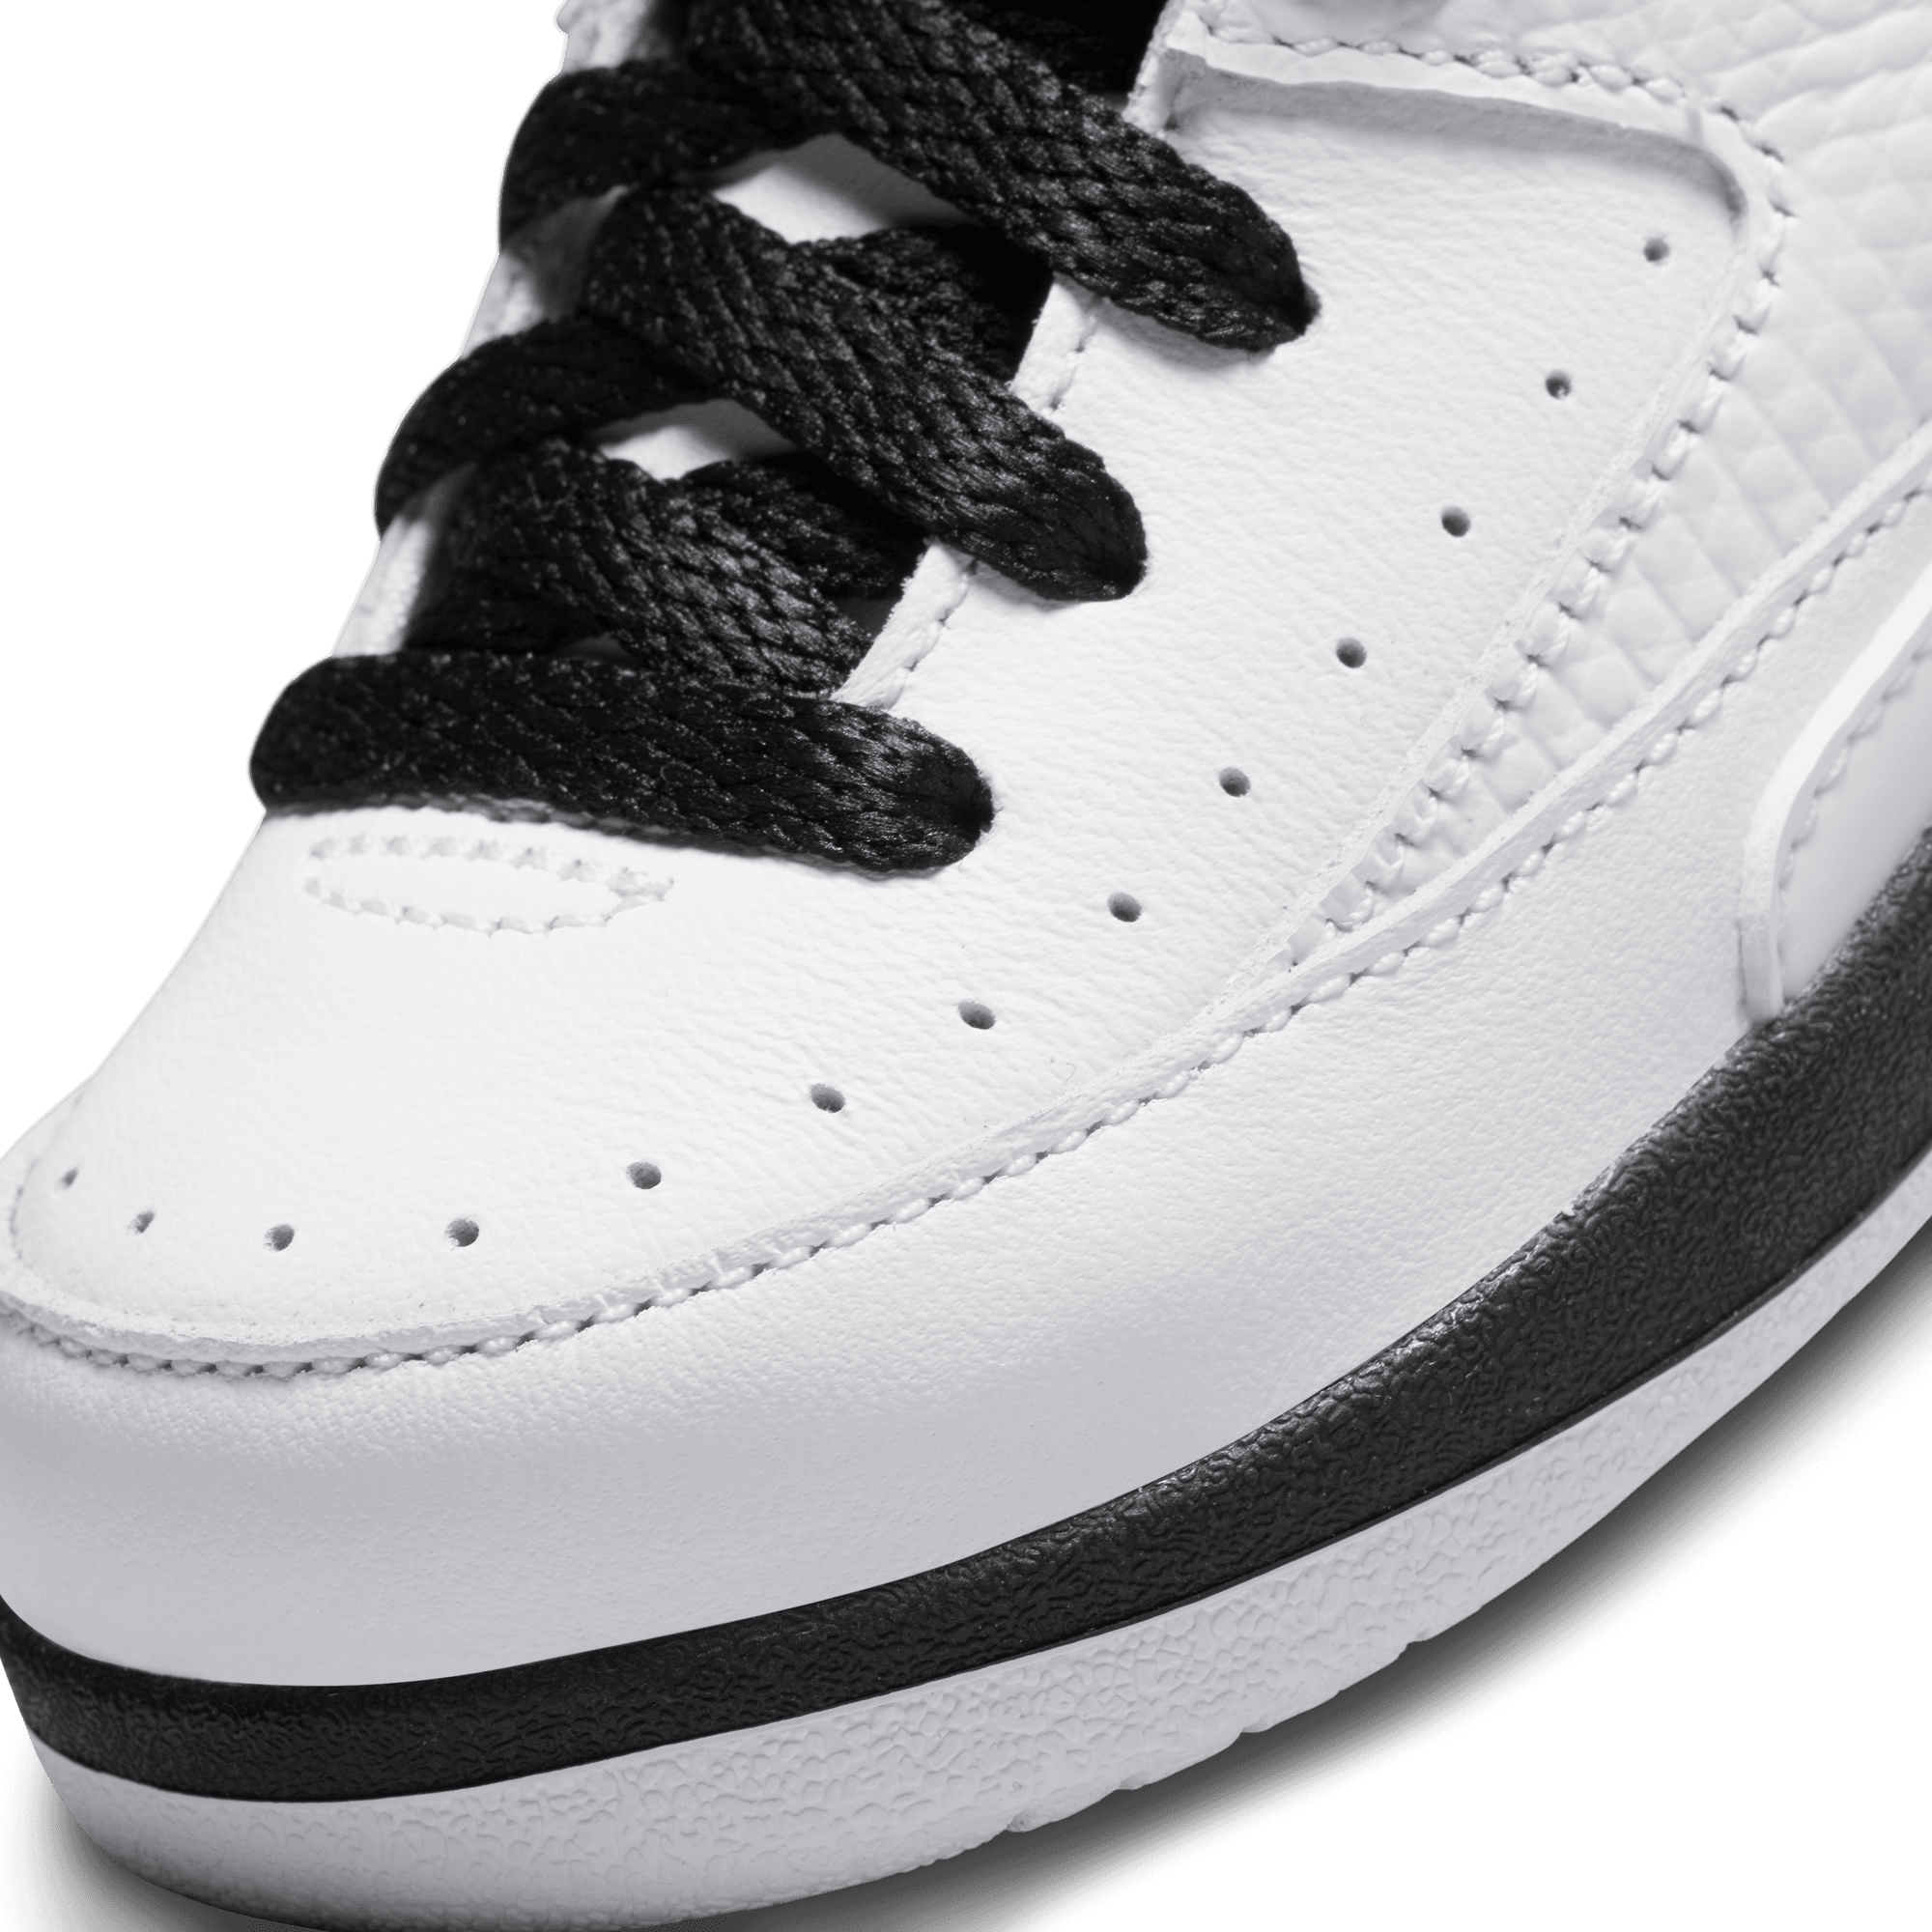 Nike Air Jordan 2 Retro OG (TD)